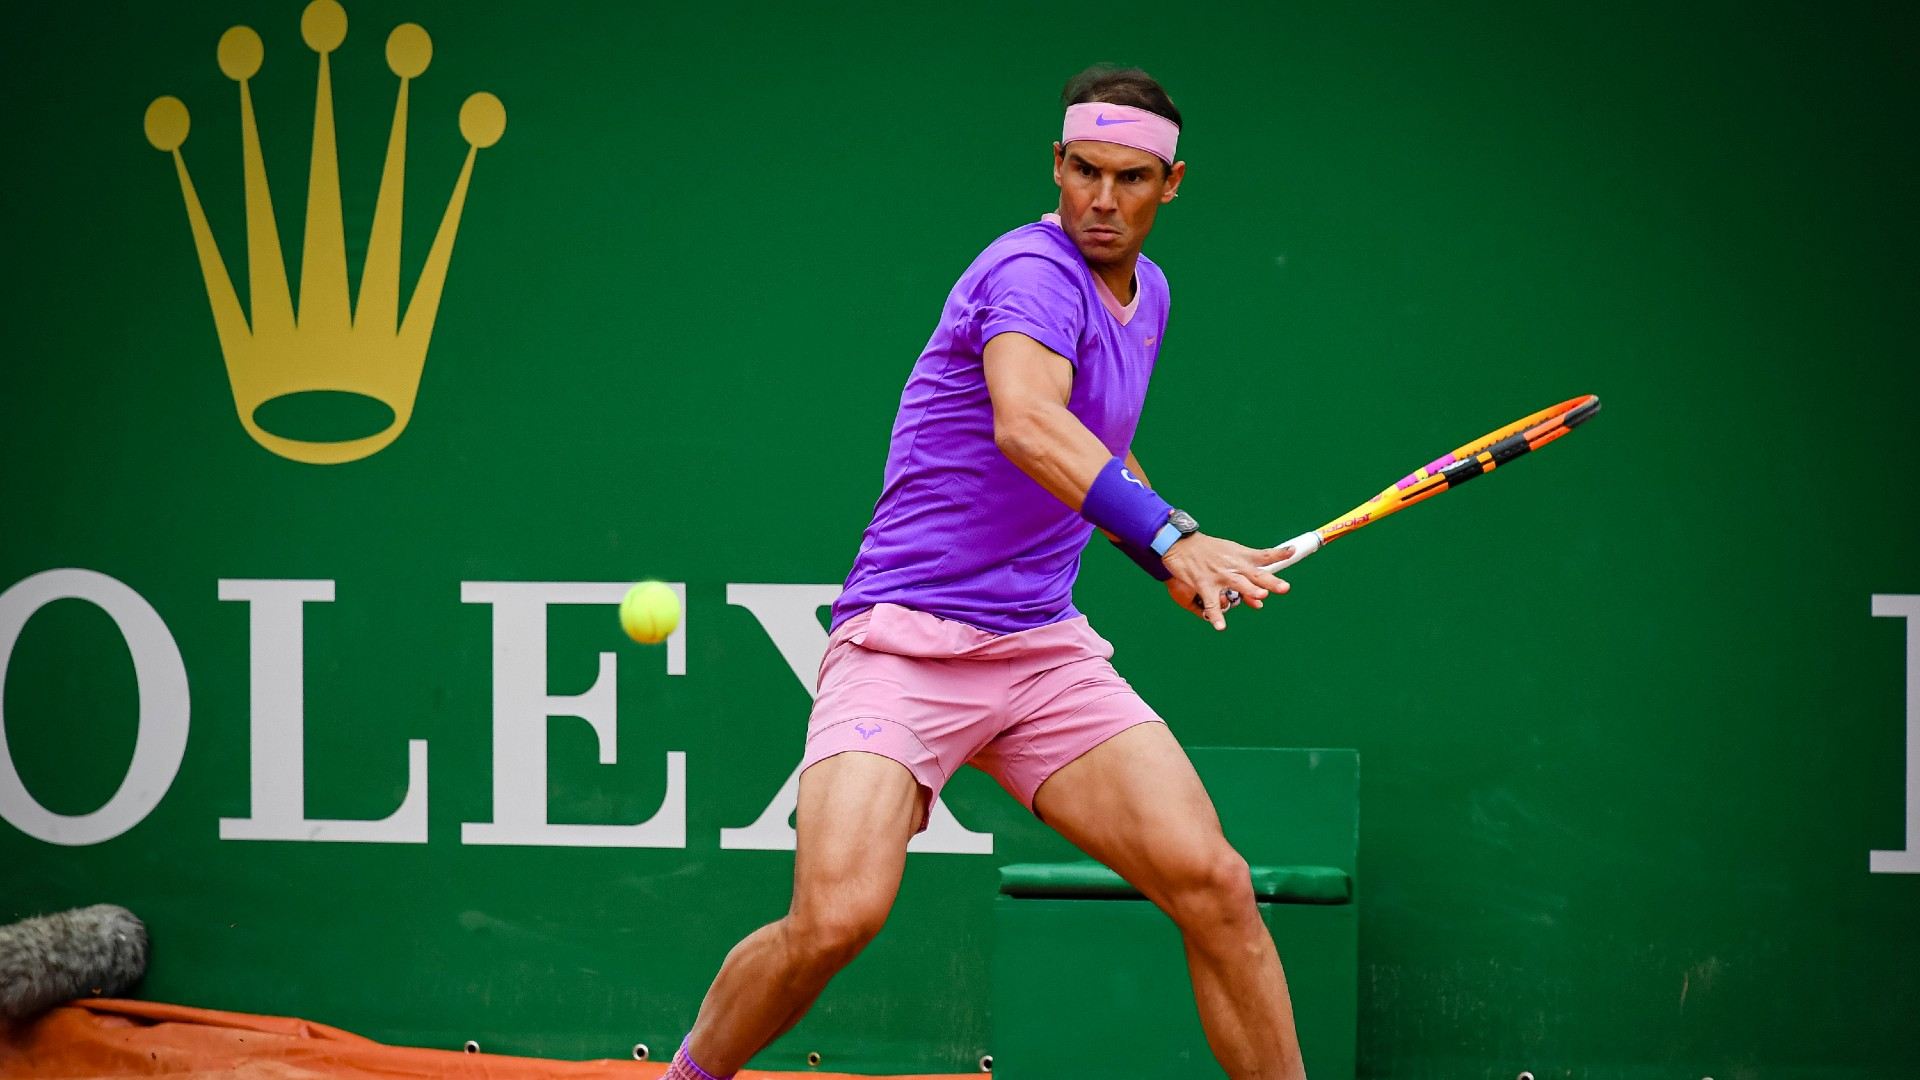 Monte Carlo Masters: Rafael Nadal in action. (Image: Twitter/@ATPtour)